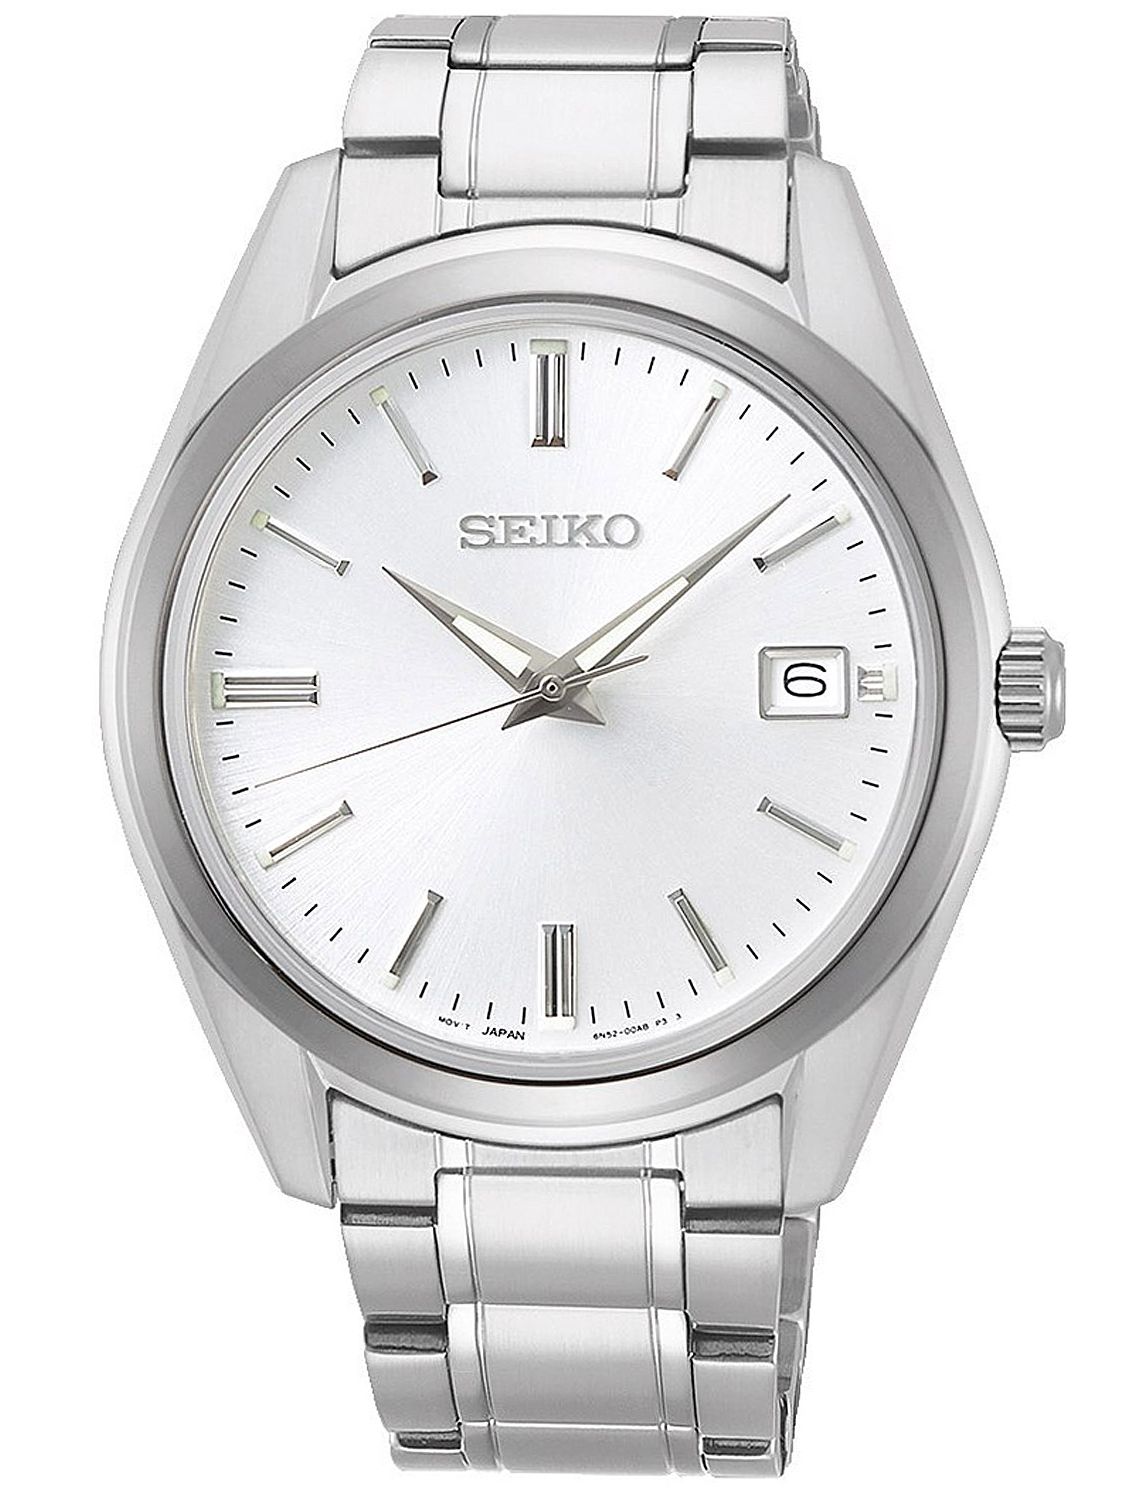 SEIKO SUR307P1 Men's Wristwatch with Sapphire Crystal